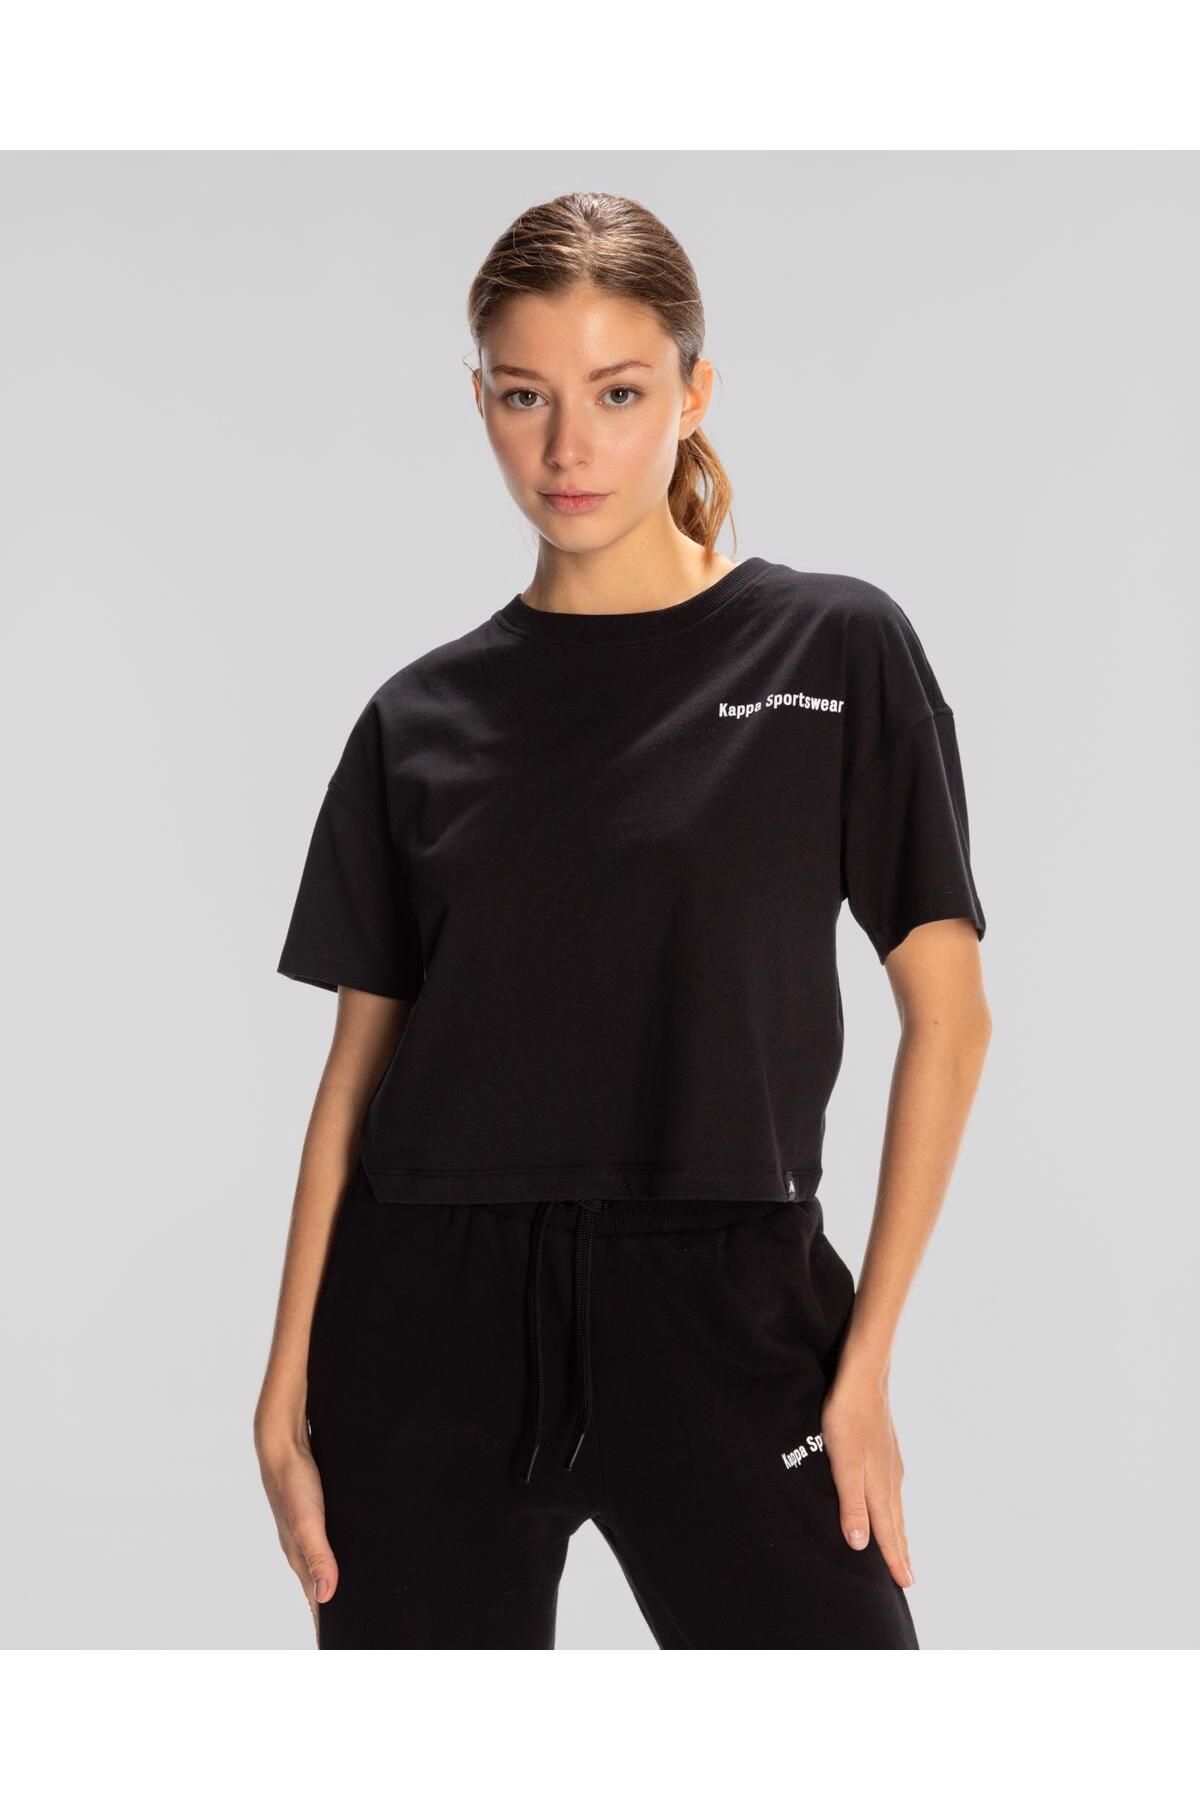 Kappa Authentic Jessa-woman-t-shirt Kadın Siyah Regular Fit Tişört